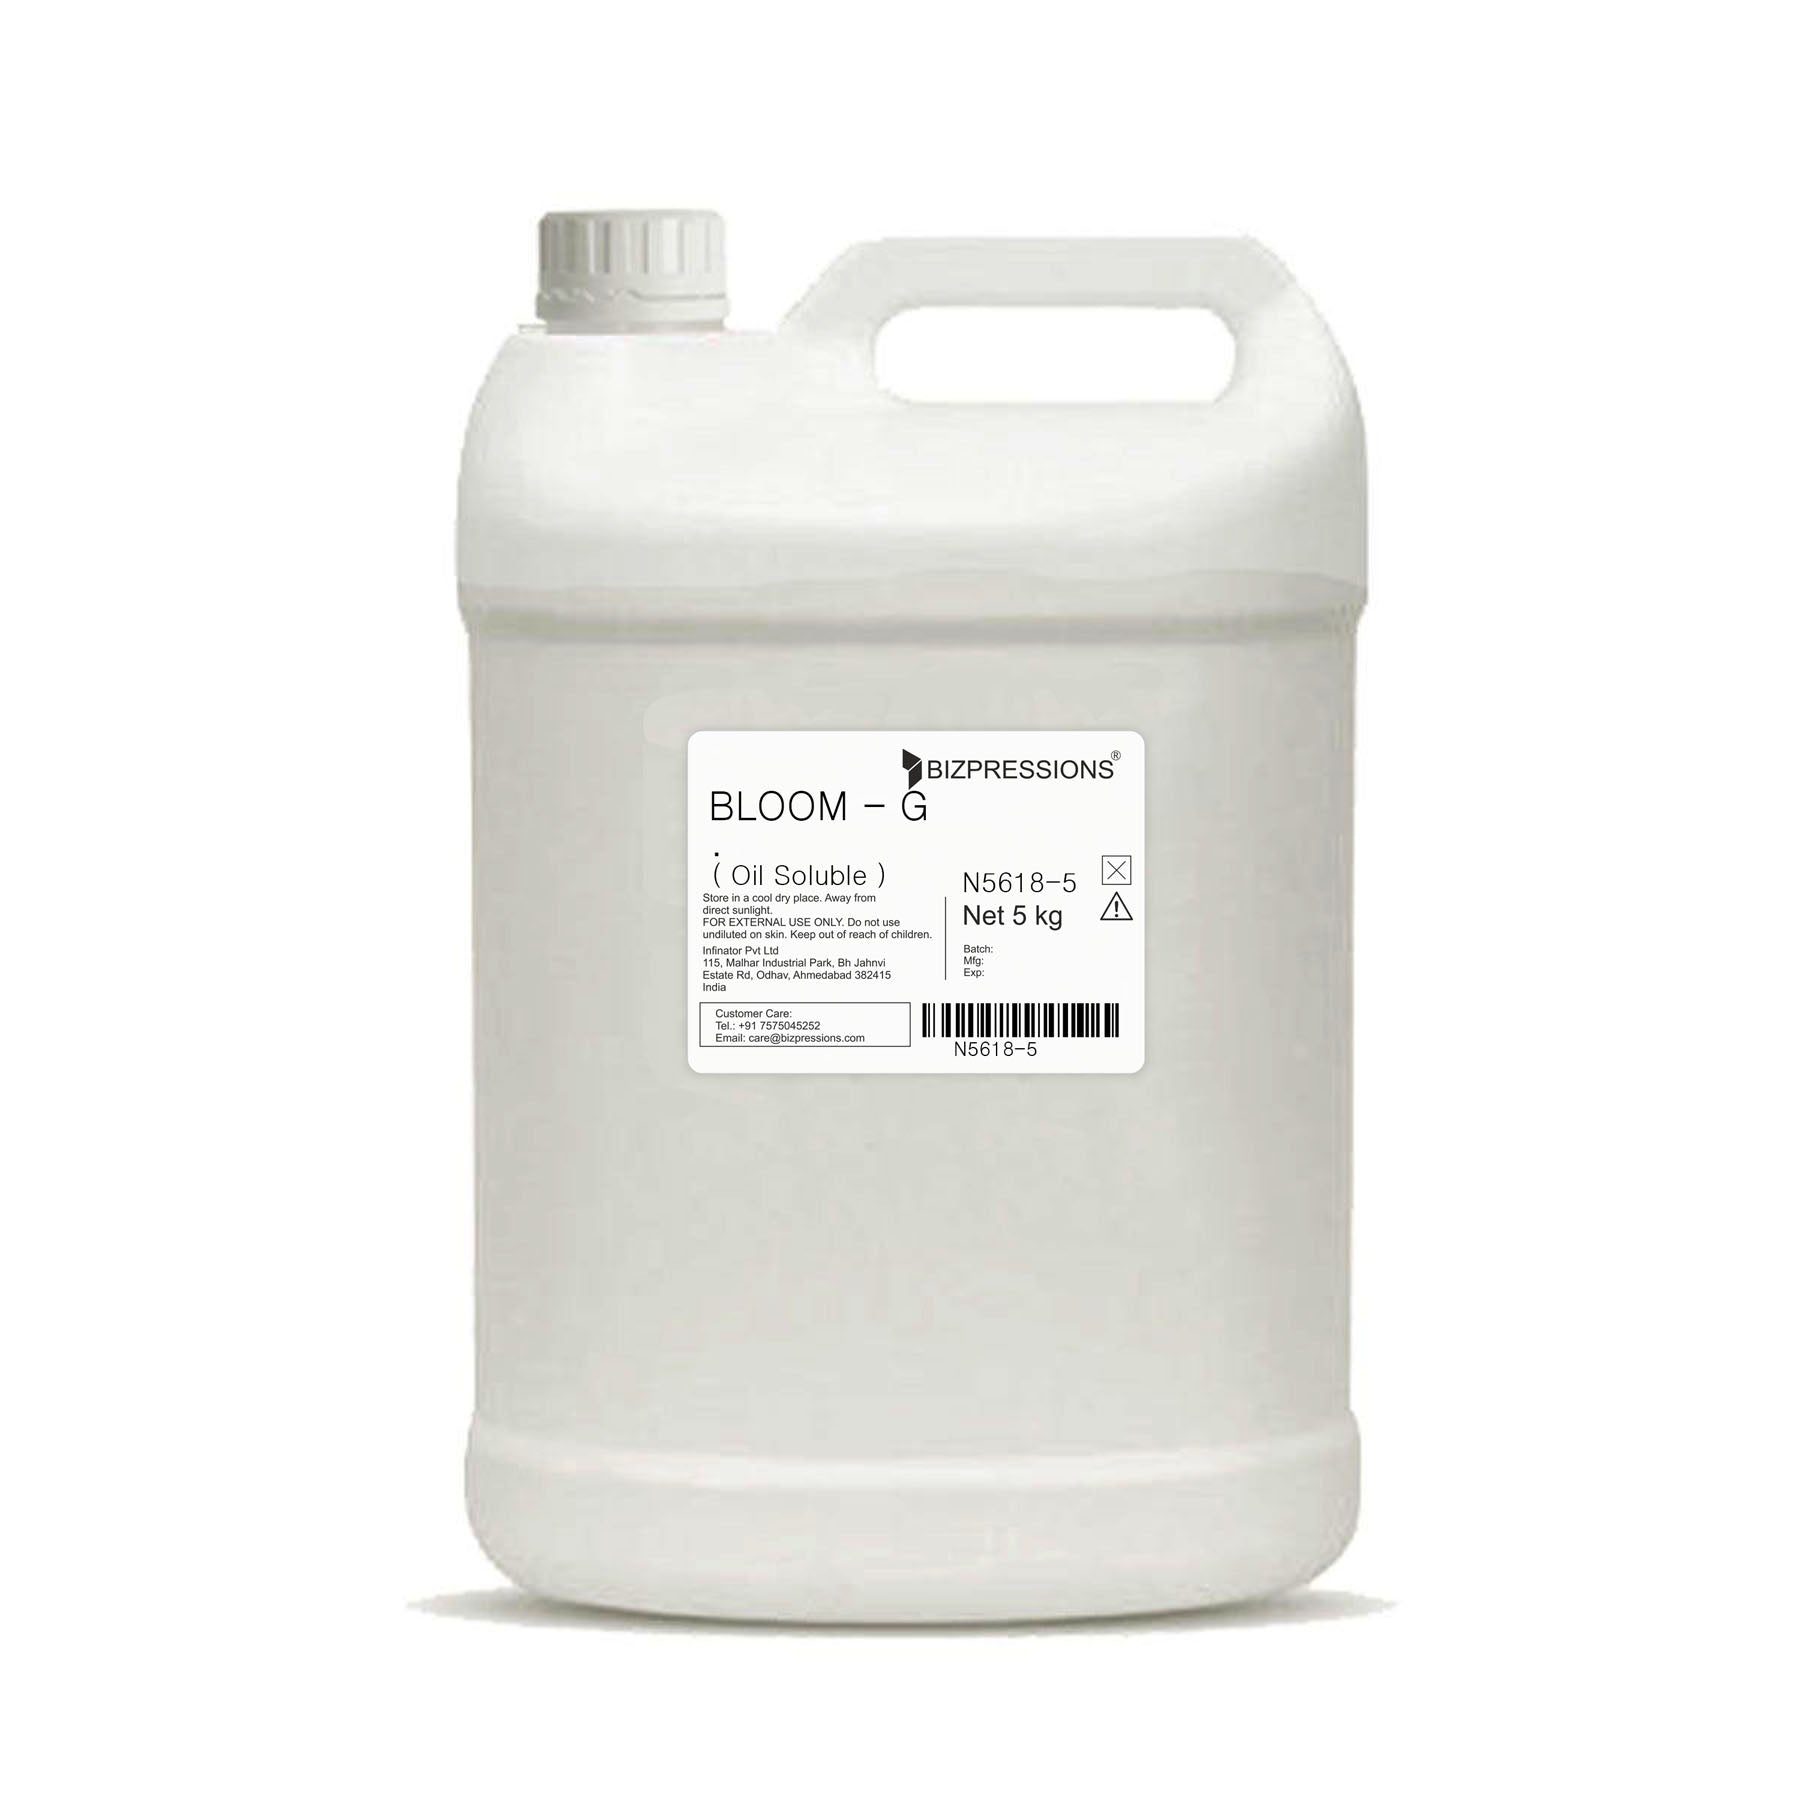 BLOOM - G - Fragrance ( Oil Soluble ) - 5 kg